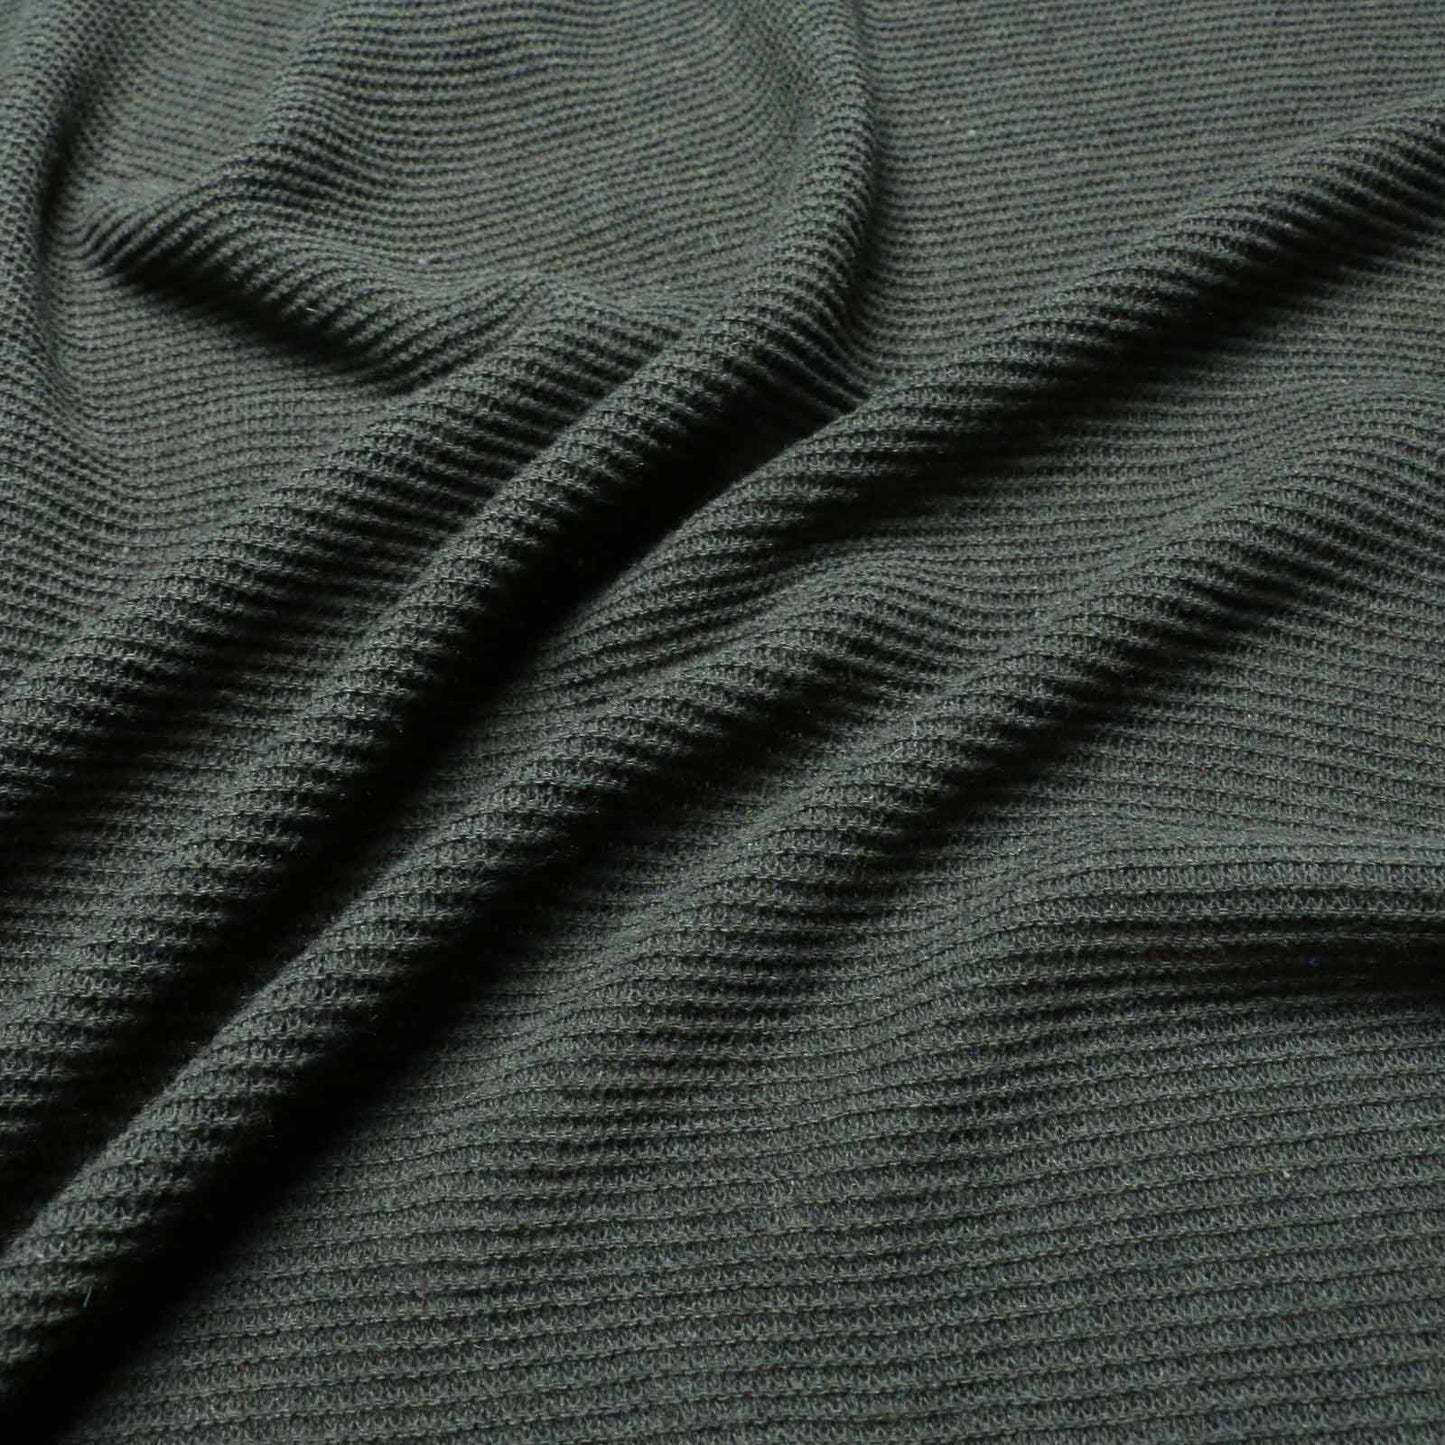 purl knit wool jersey khaki green colour dressmaking fabric